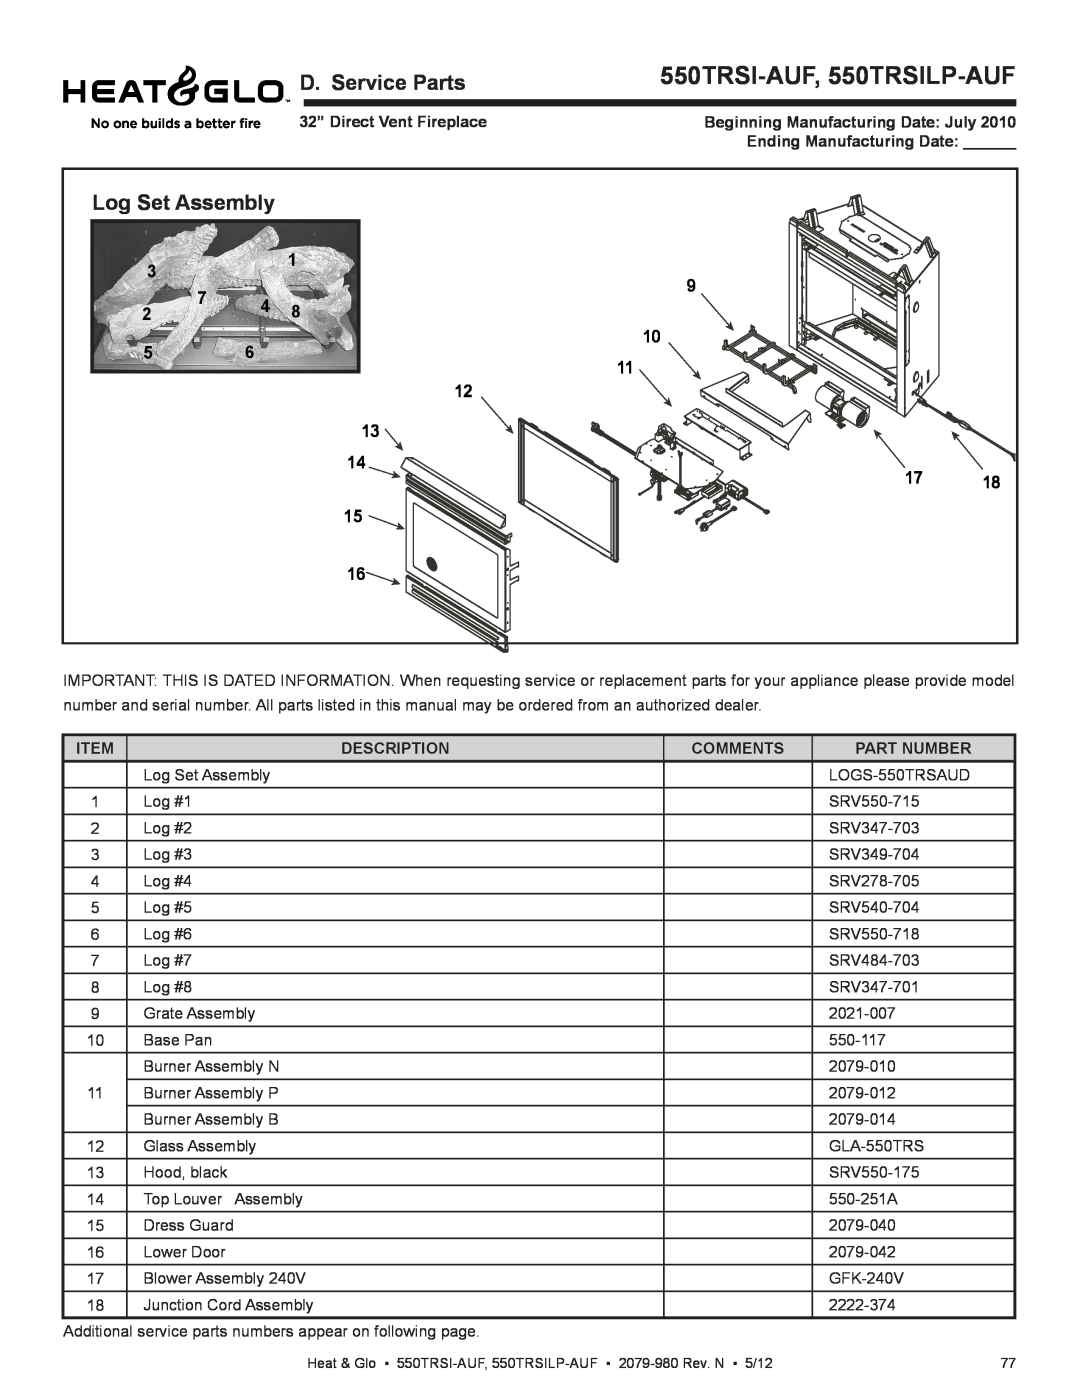 Heat & Glo LifeStyle owner manual 550TRSI-AUF, 550TRSILP-AUF, D. Service Parts, Log Set Assembly 